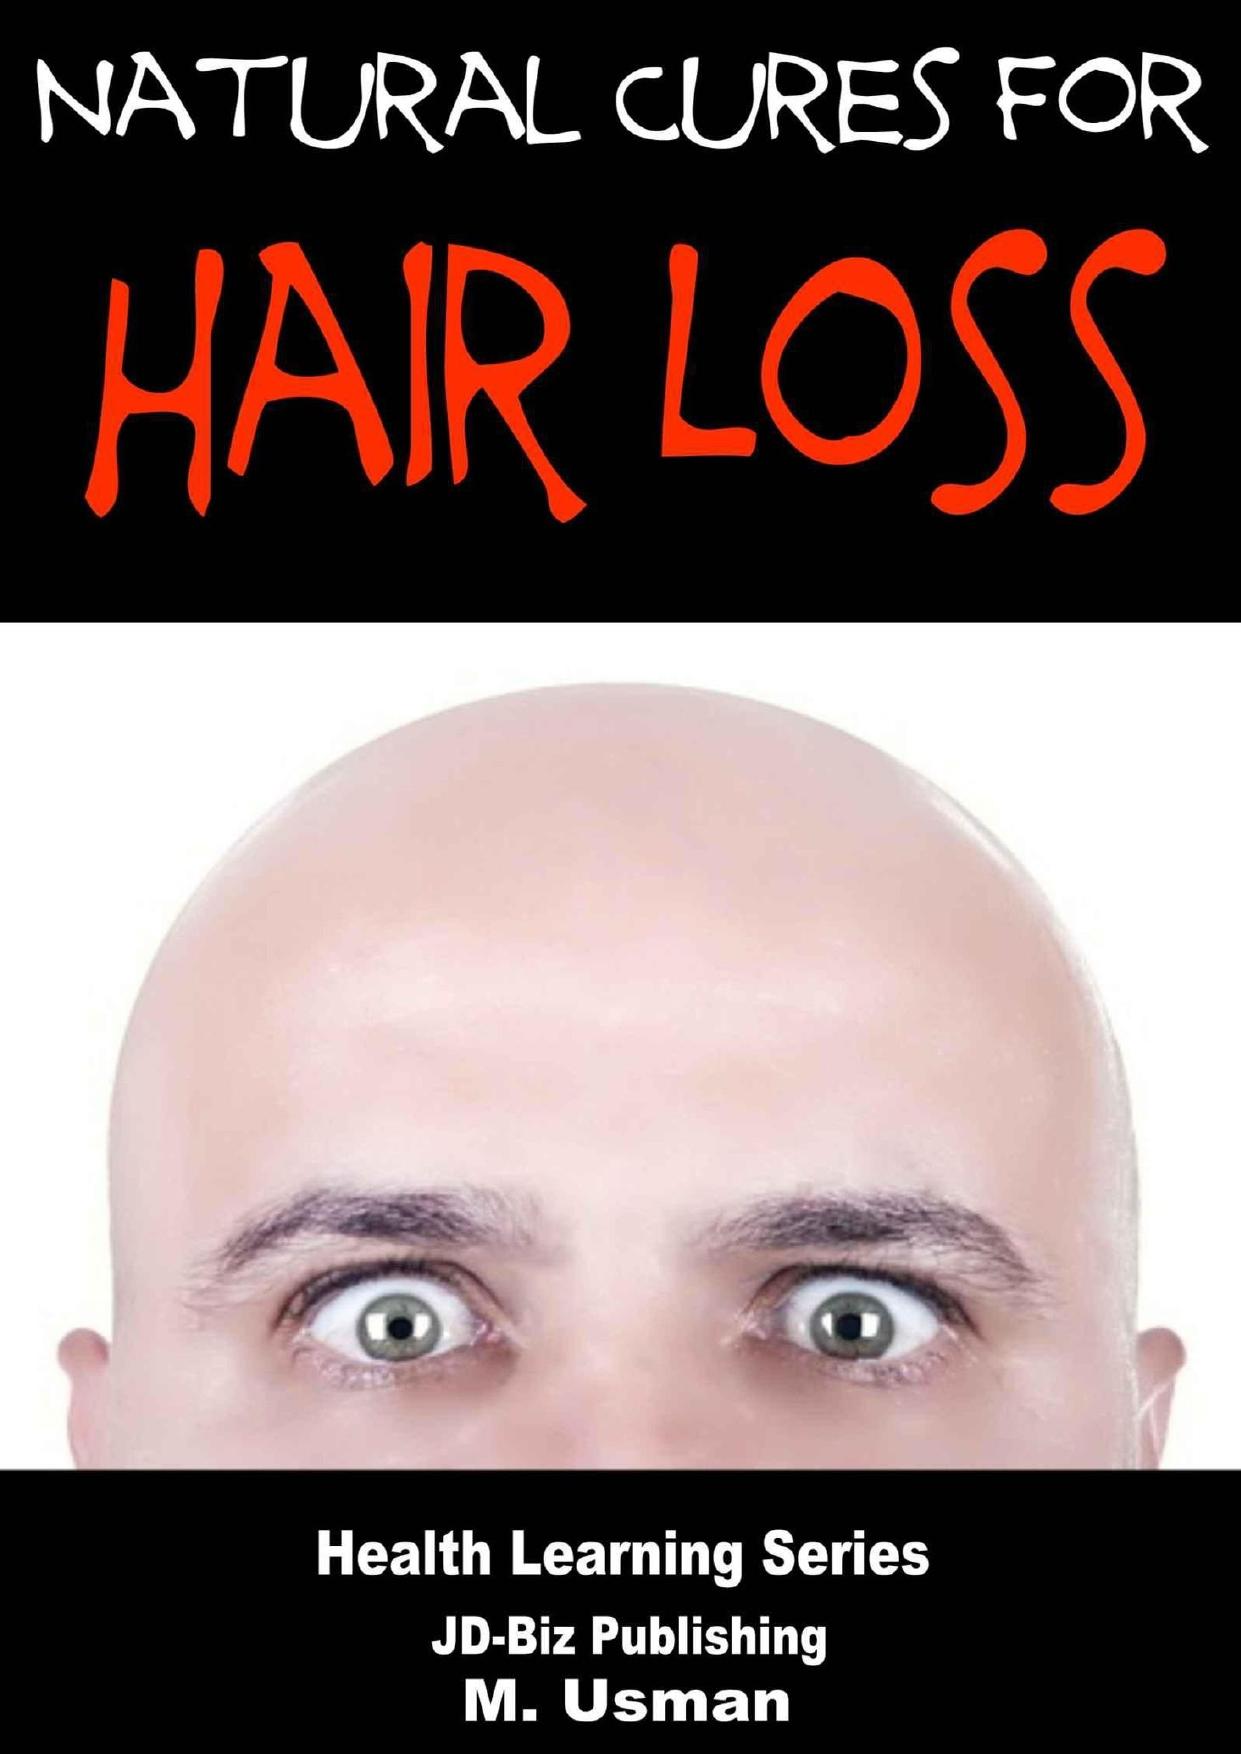 Natural Cures for Hair Loss by M. Usman & John Davidson